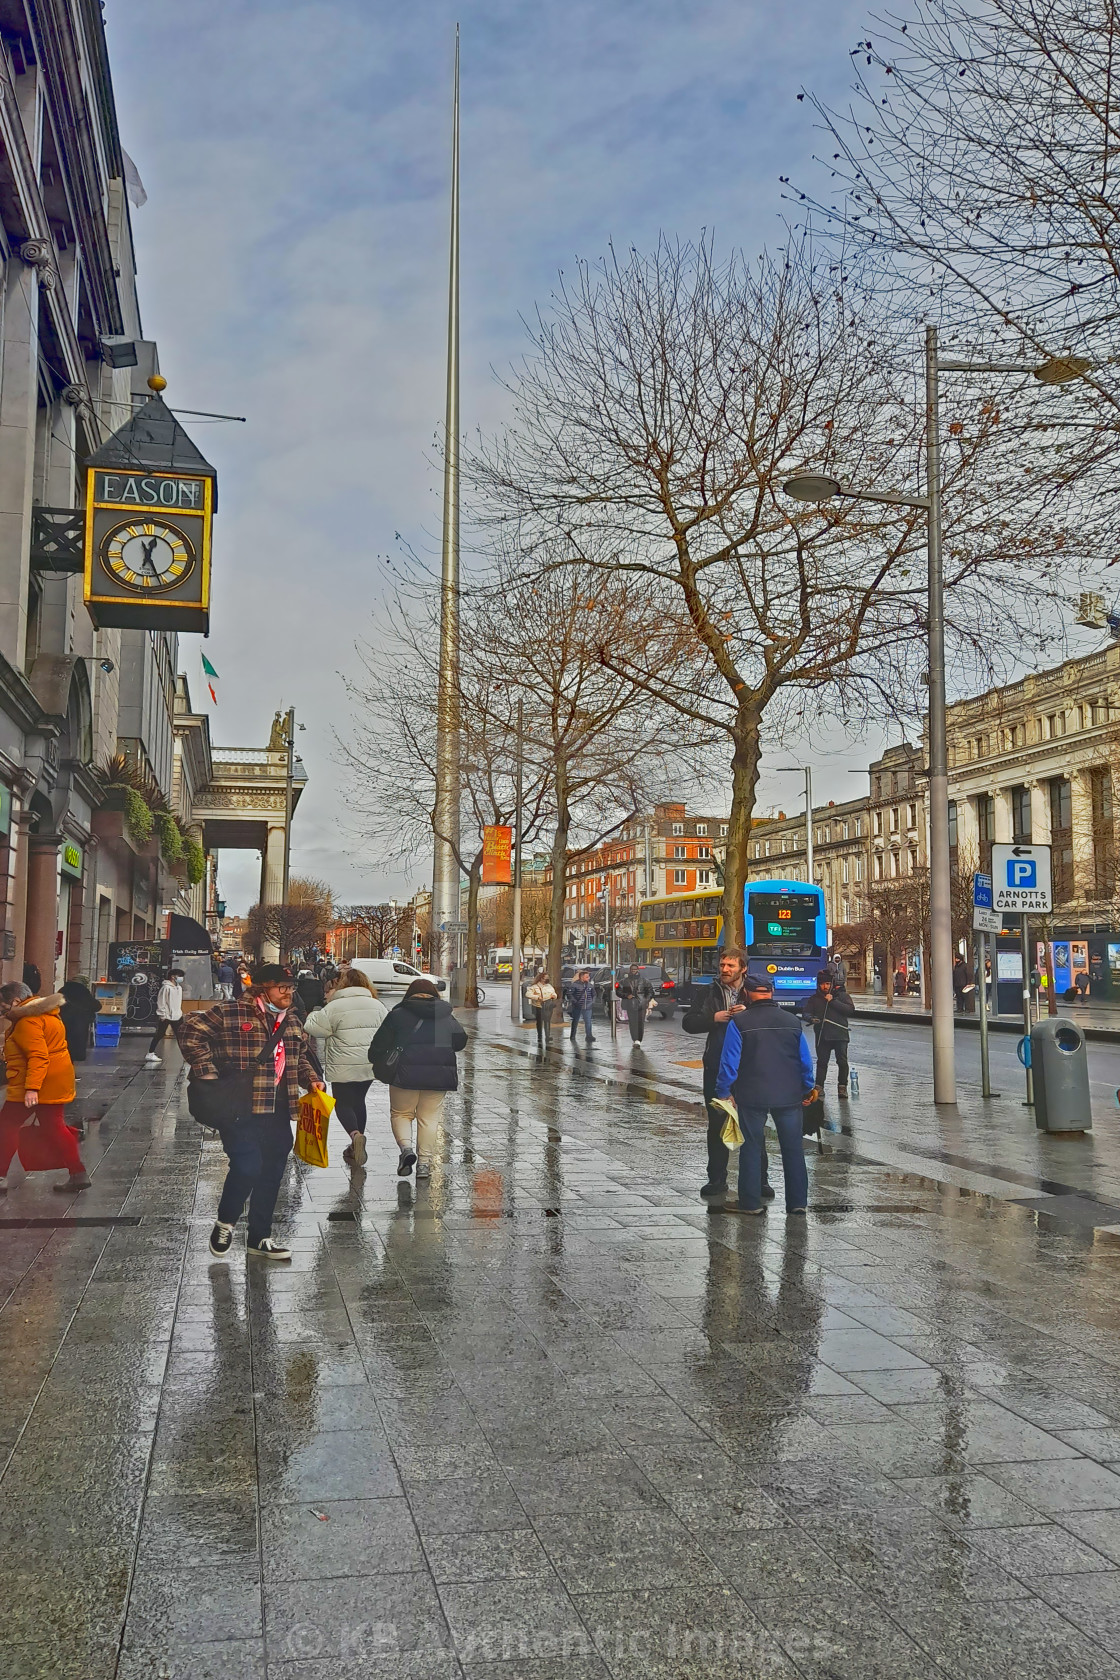 "Dublin City" stock image